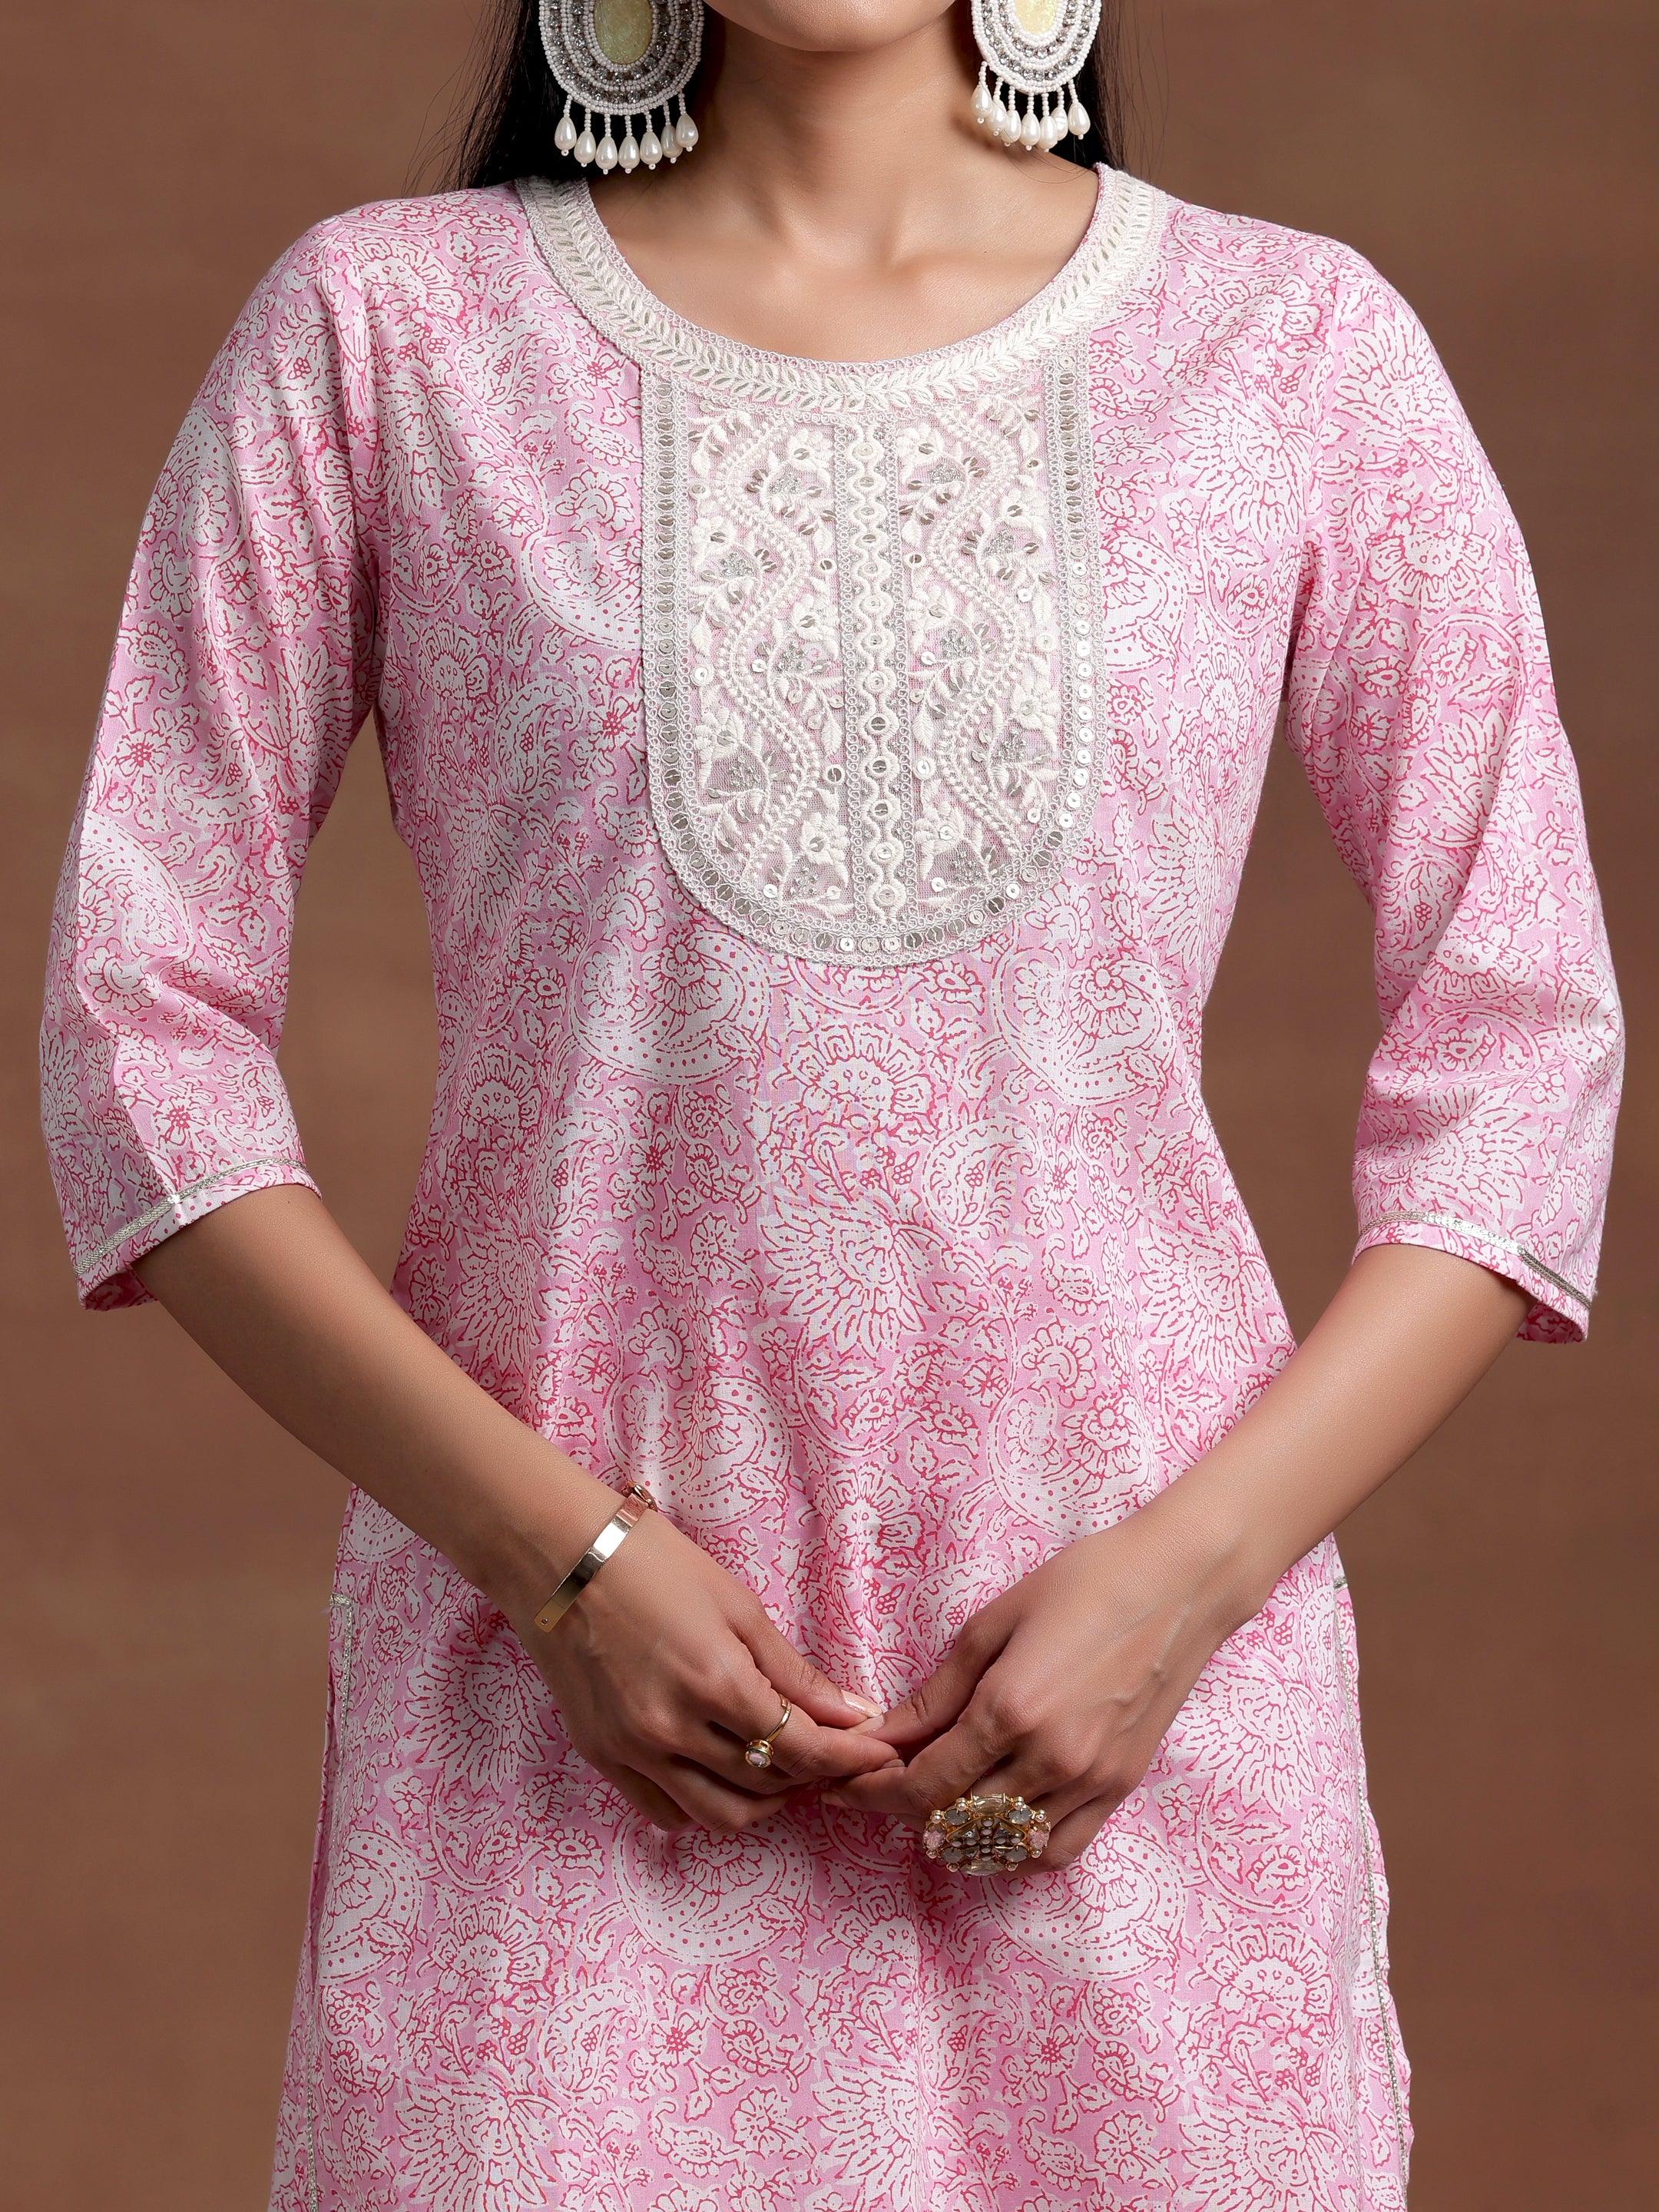 Pink Yoke Design Cotton Straight Suit With Dupatta